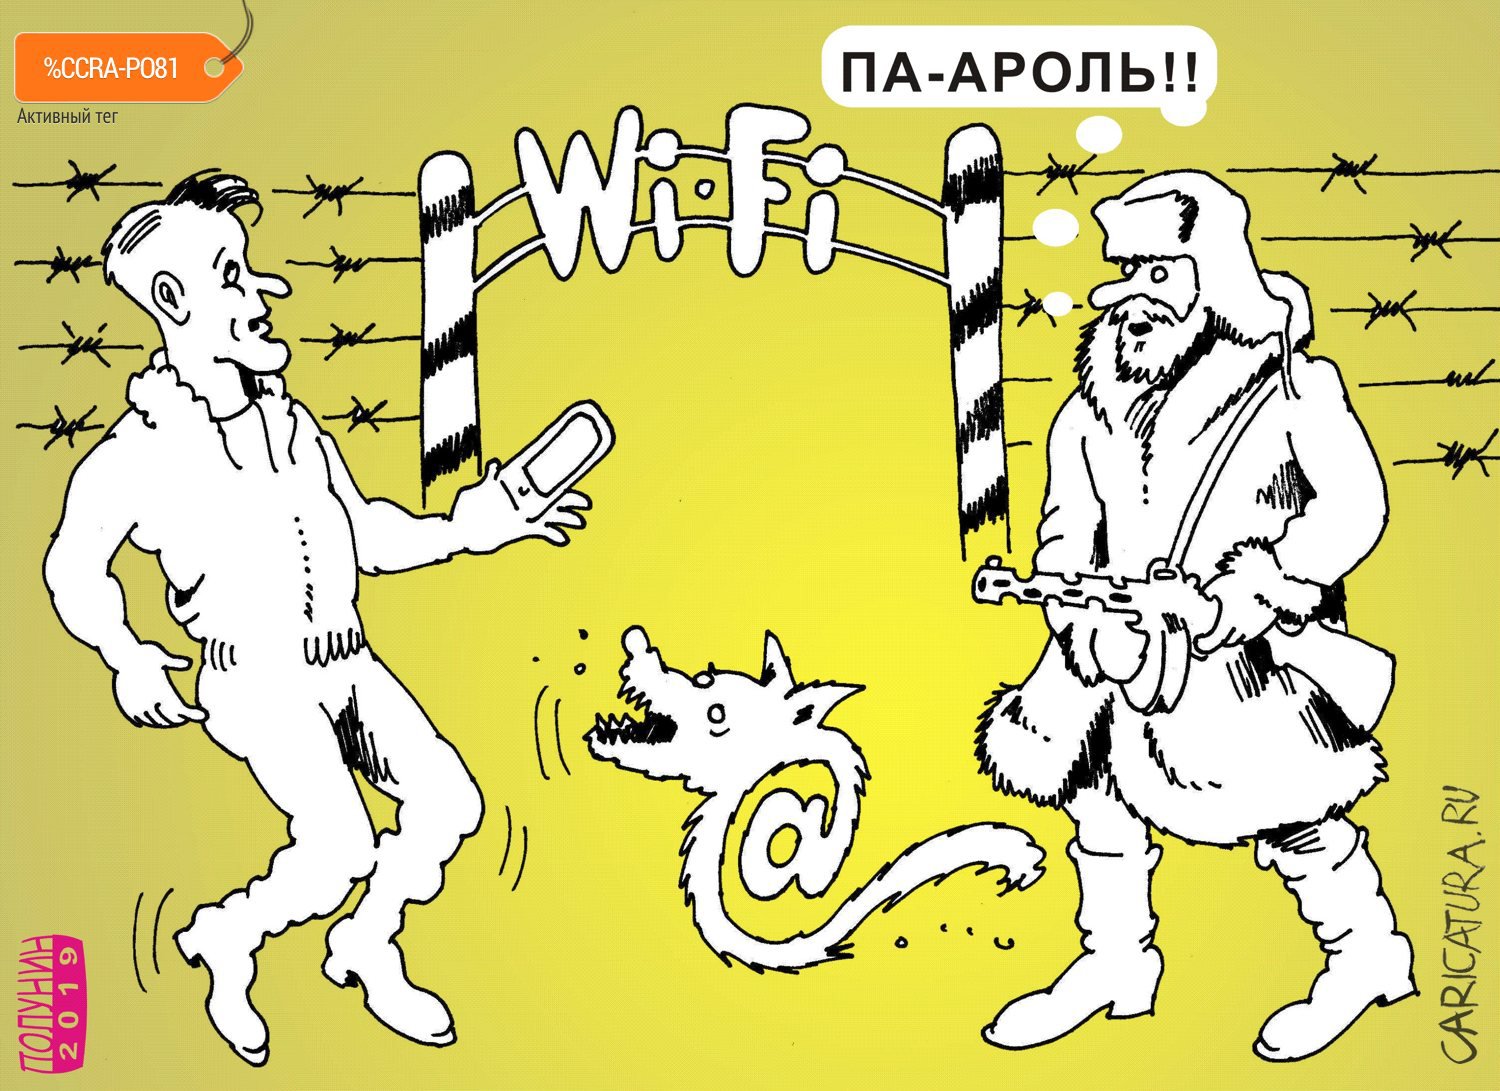   wi-fi,  